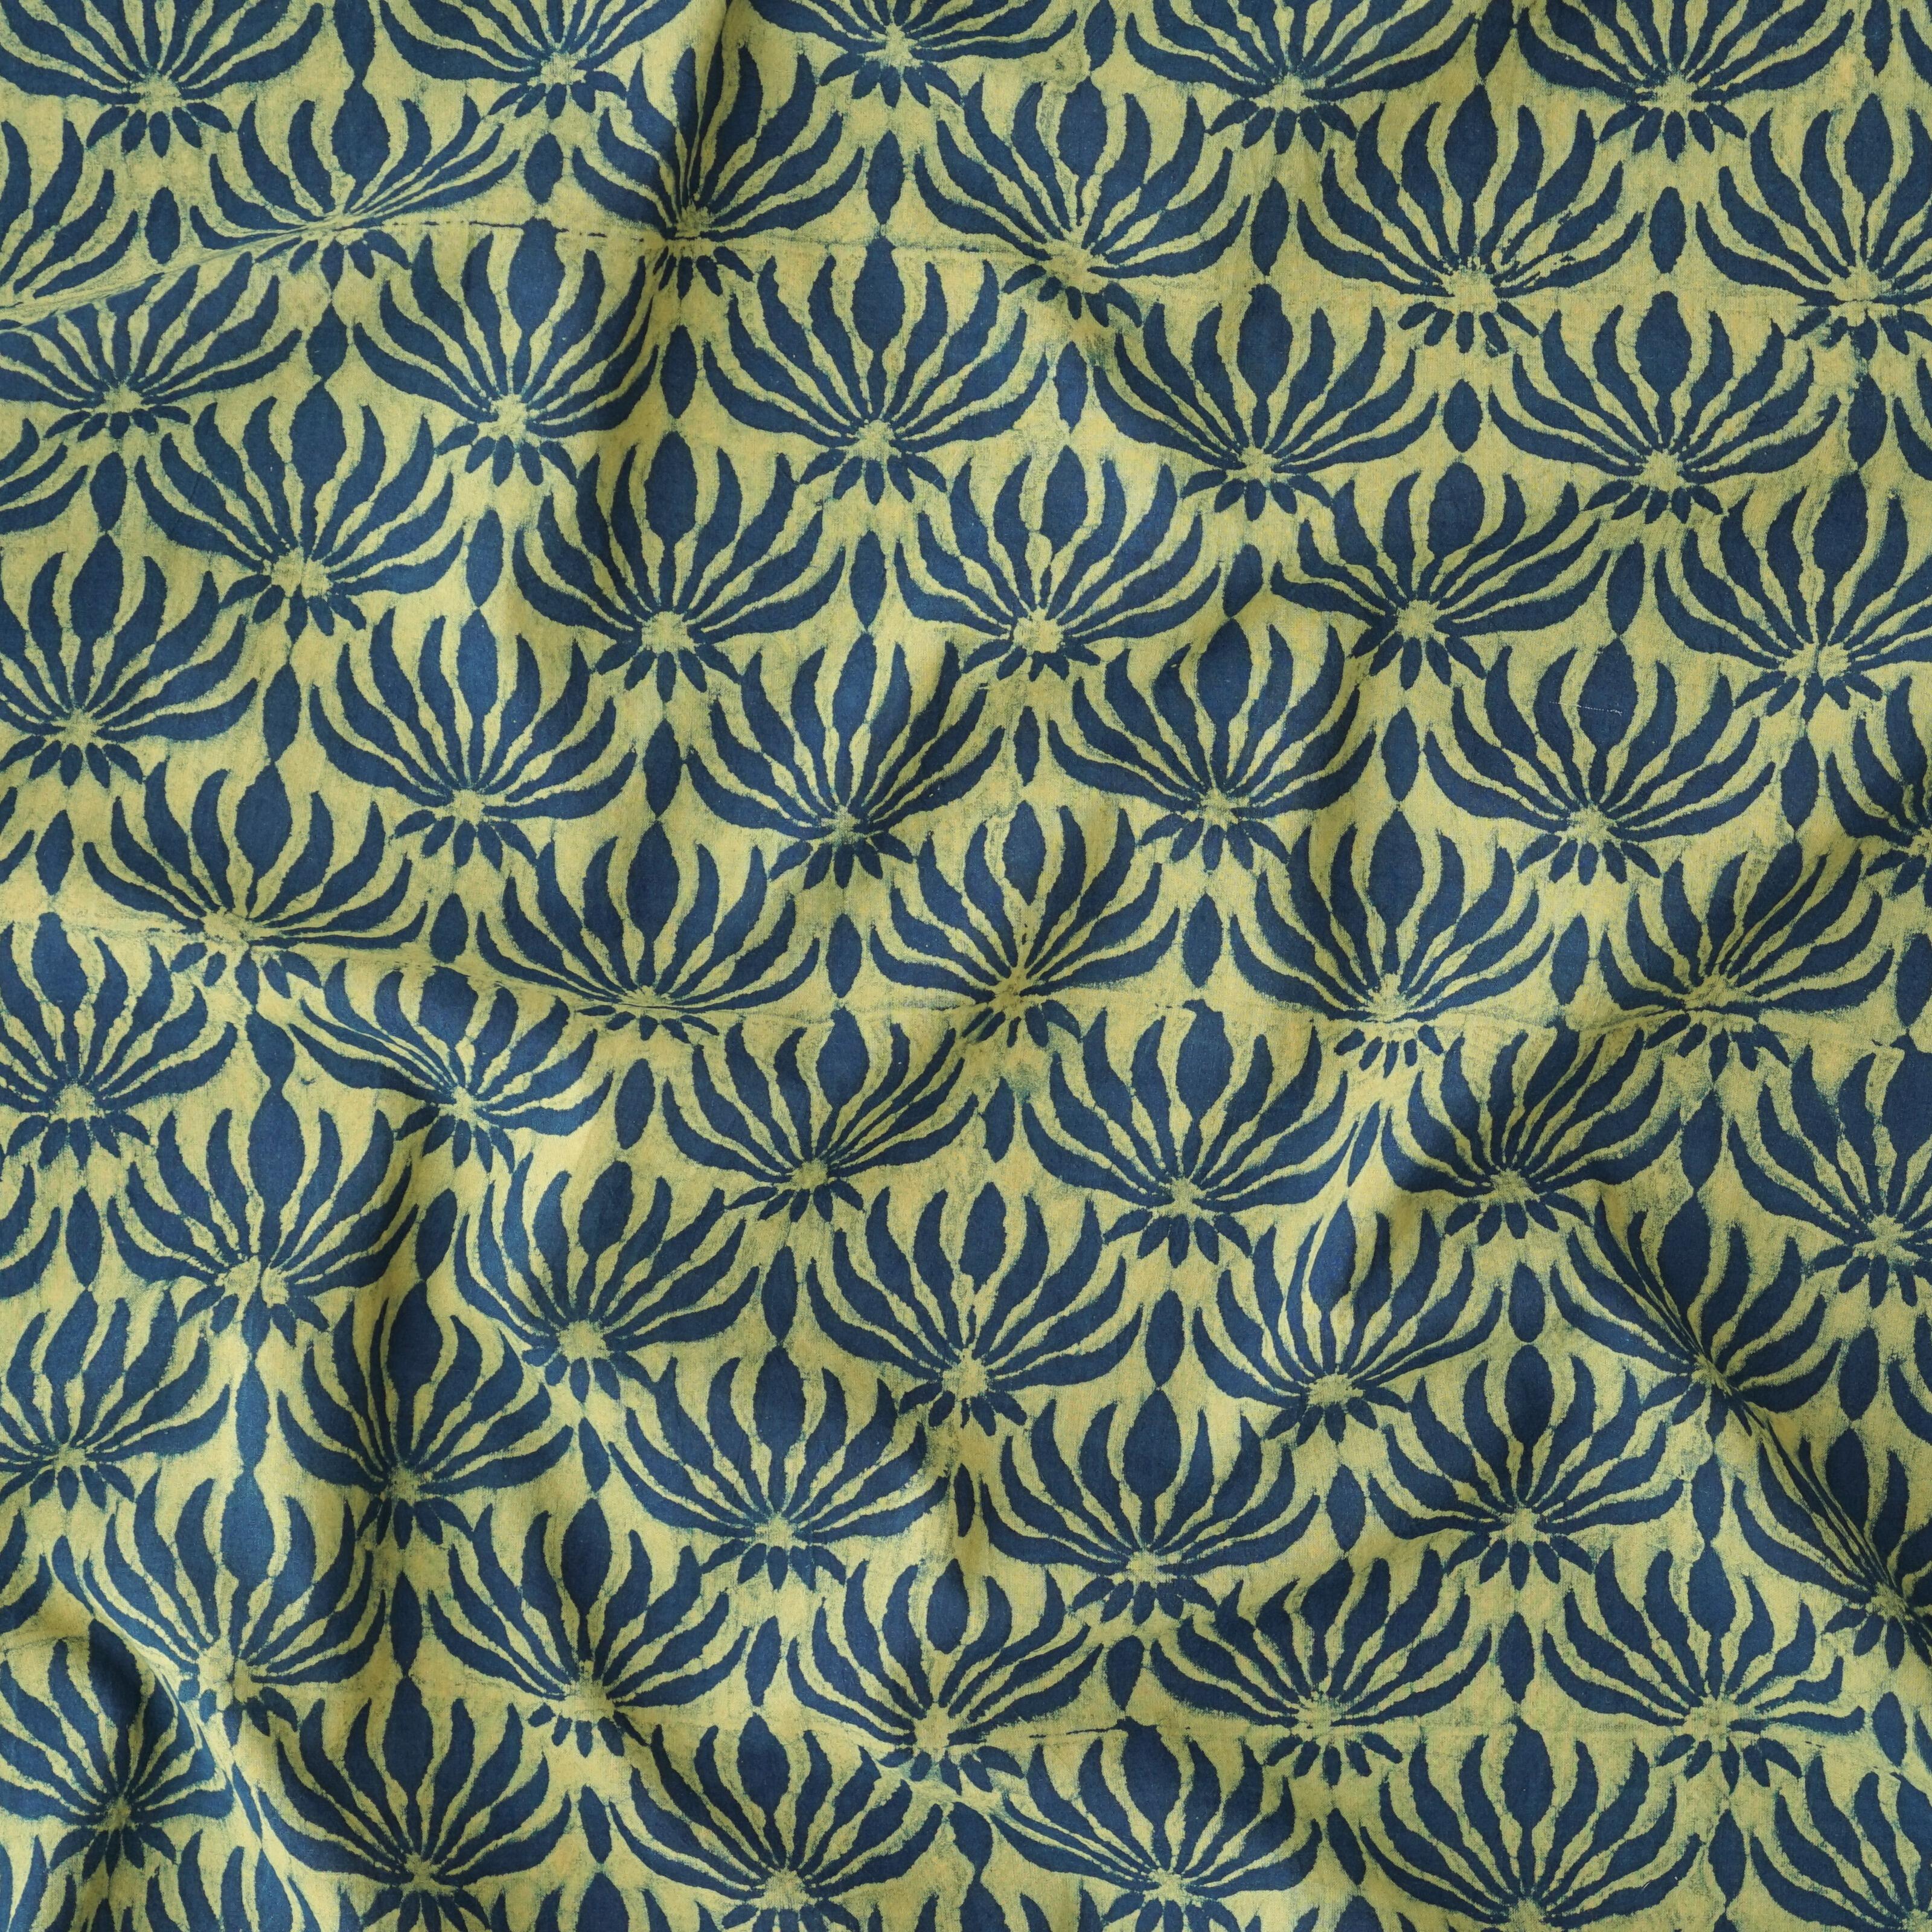 AHM54 - Block-Printed Fabric - Lotus Flower Design - Indigo & Tamarisk Dyes - Contrast